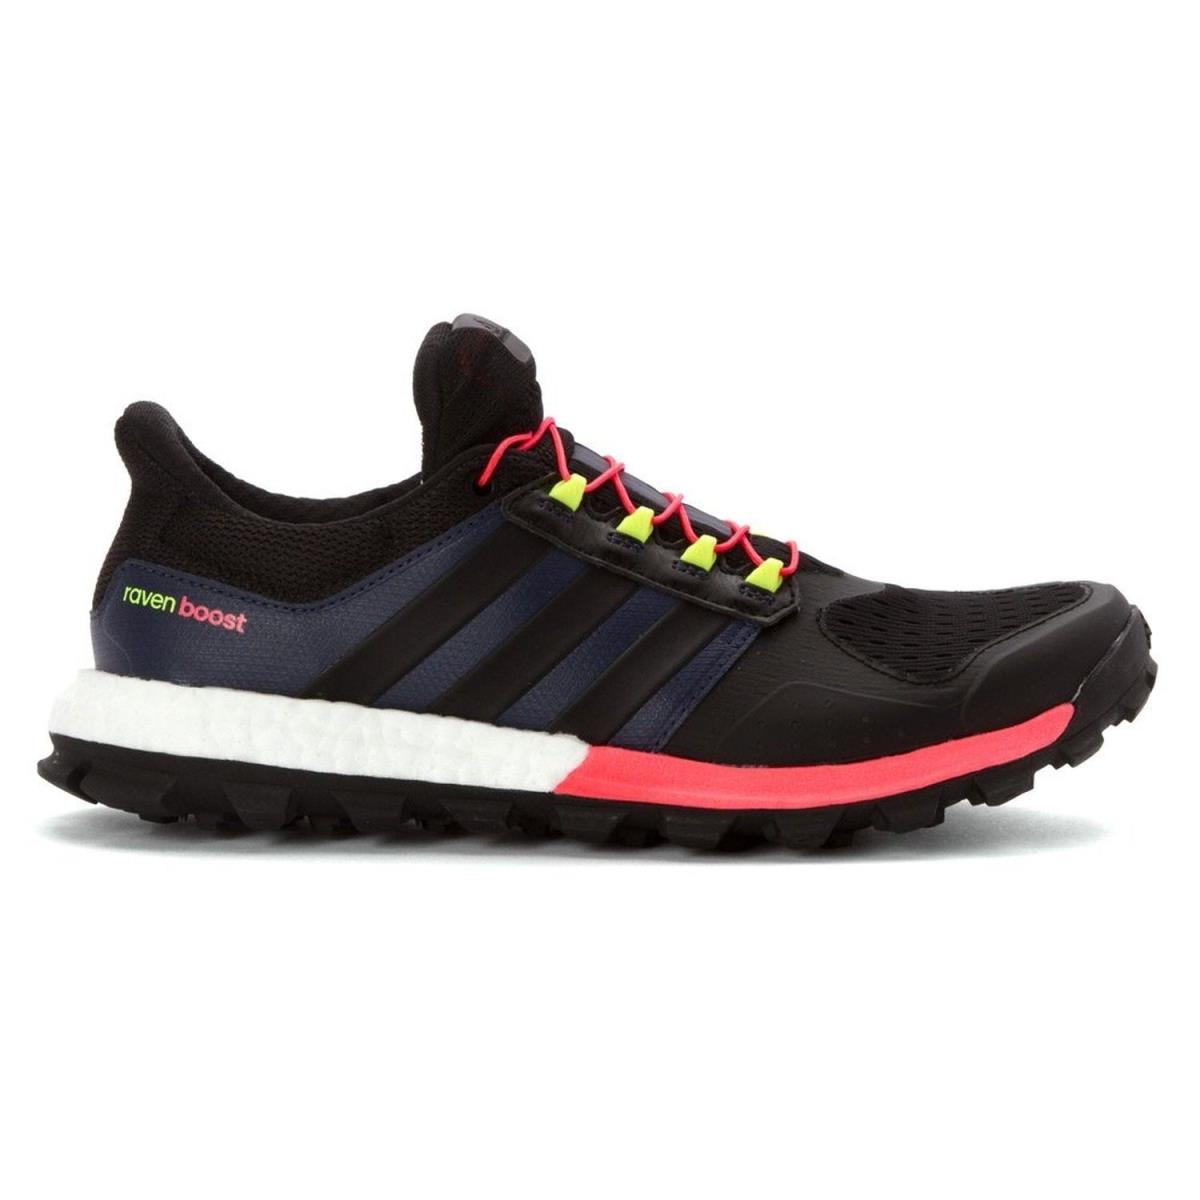 Adidas Women`s Shoes Raven Boost w Sz 11 B25108 Trail Running Black | 692740030517 - Adidas shoes - Black Flesh |